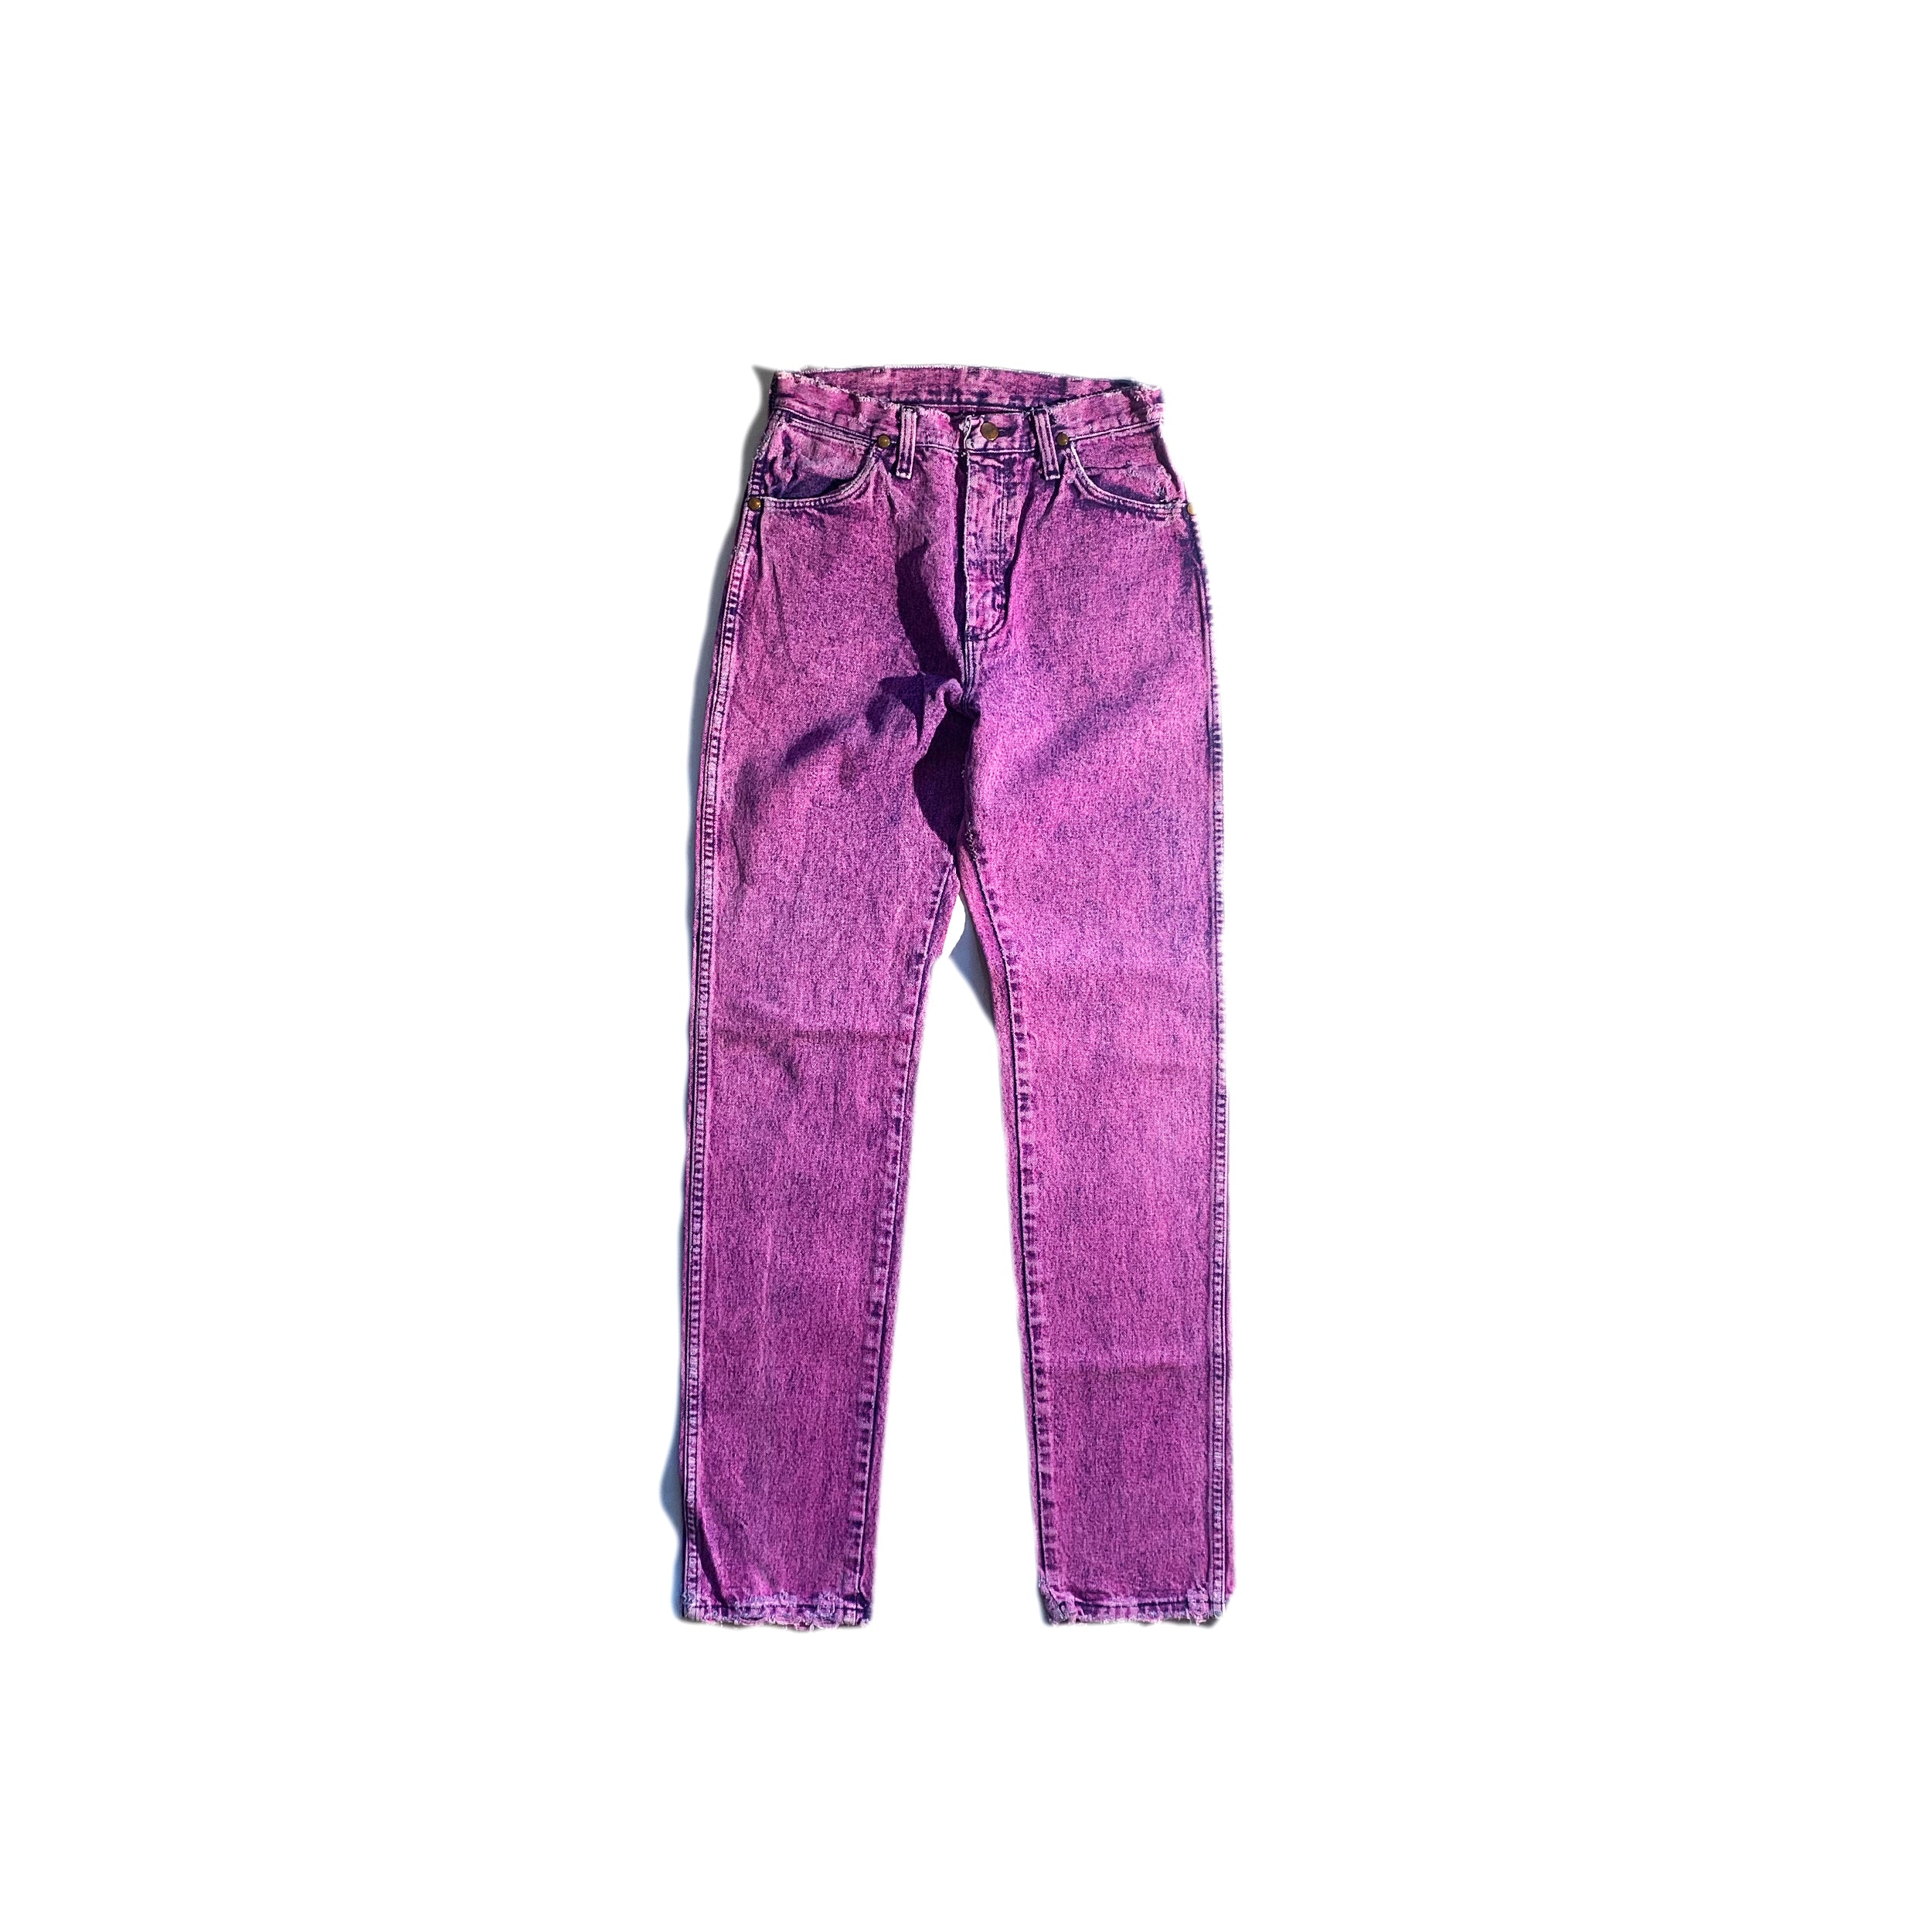 Purple Brand Jeans for Sale in Clearwater, FL - OfferUp